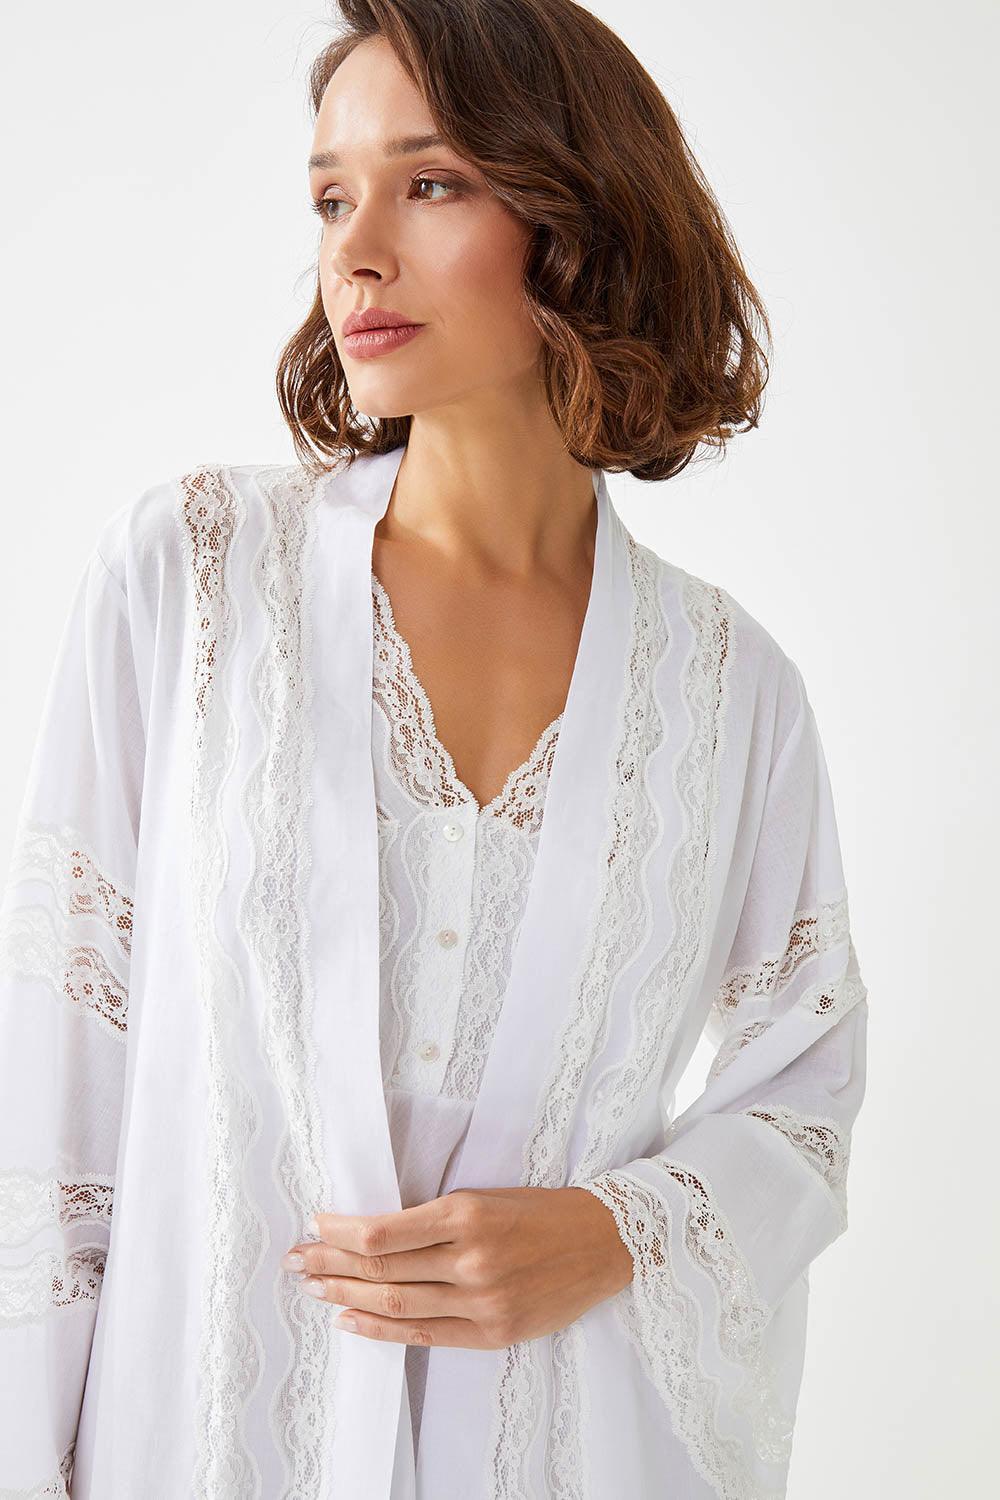 Eira Trimmed Cotton Voile Long Sleeve Robe Set -  White - Bocan